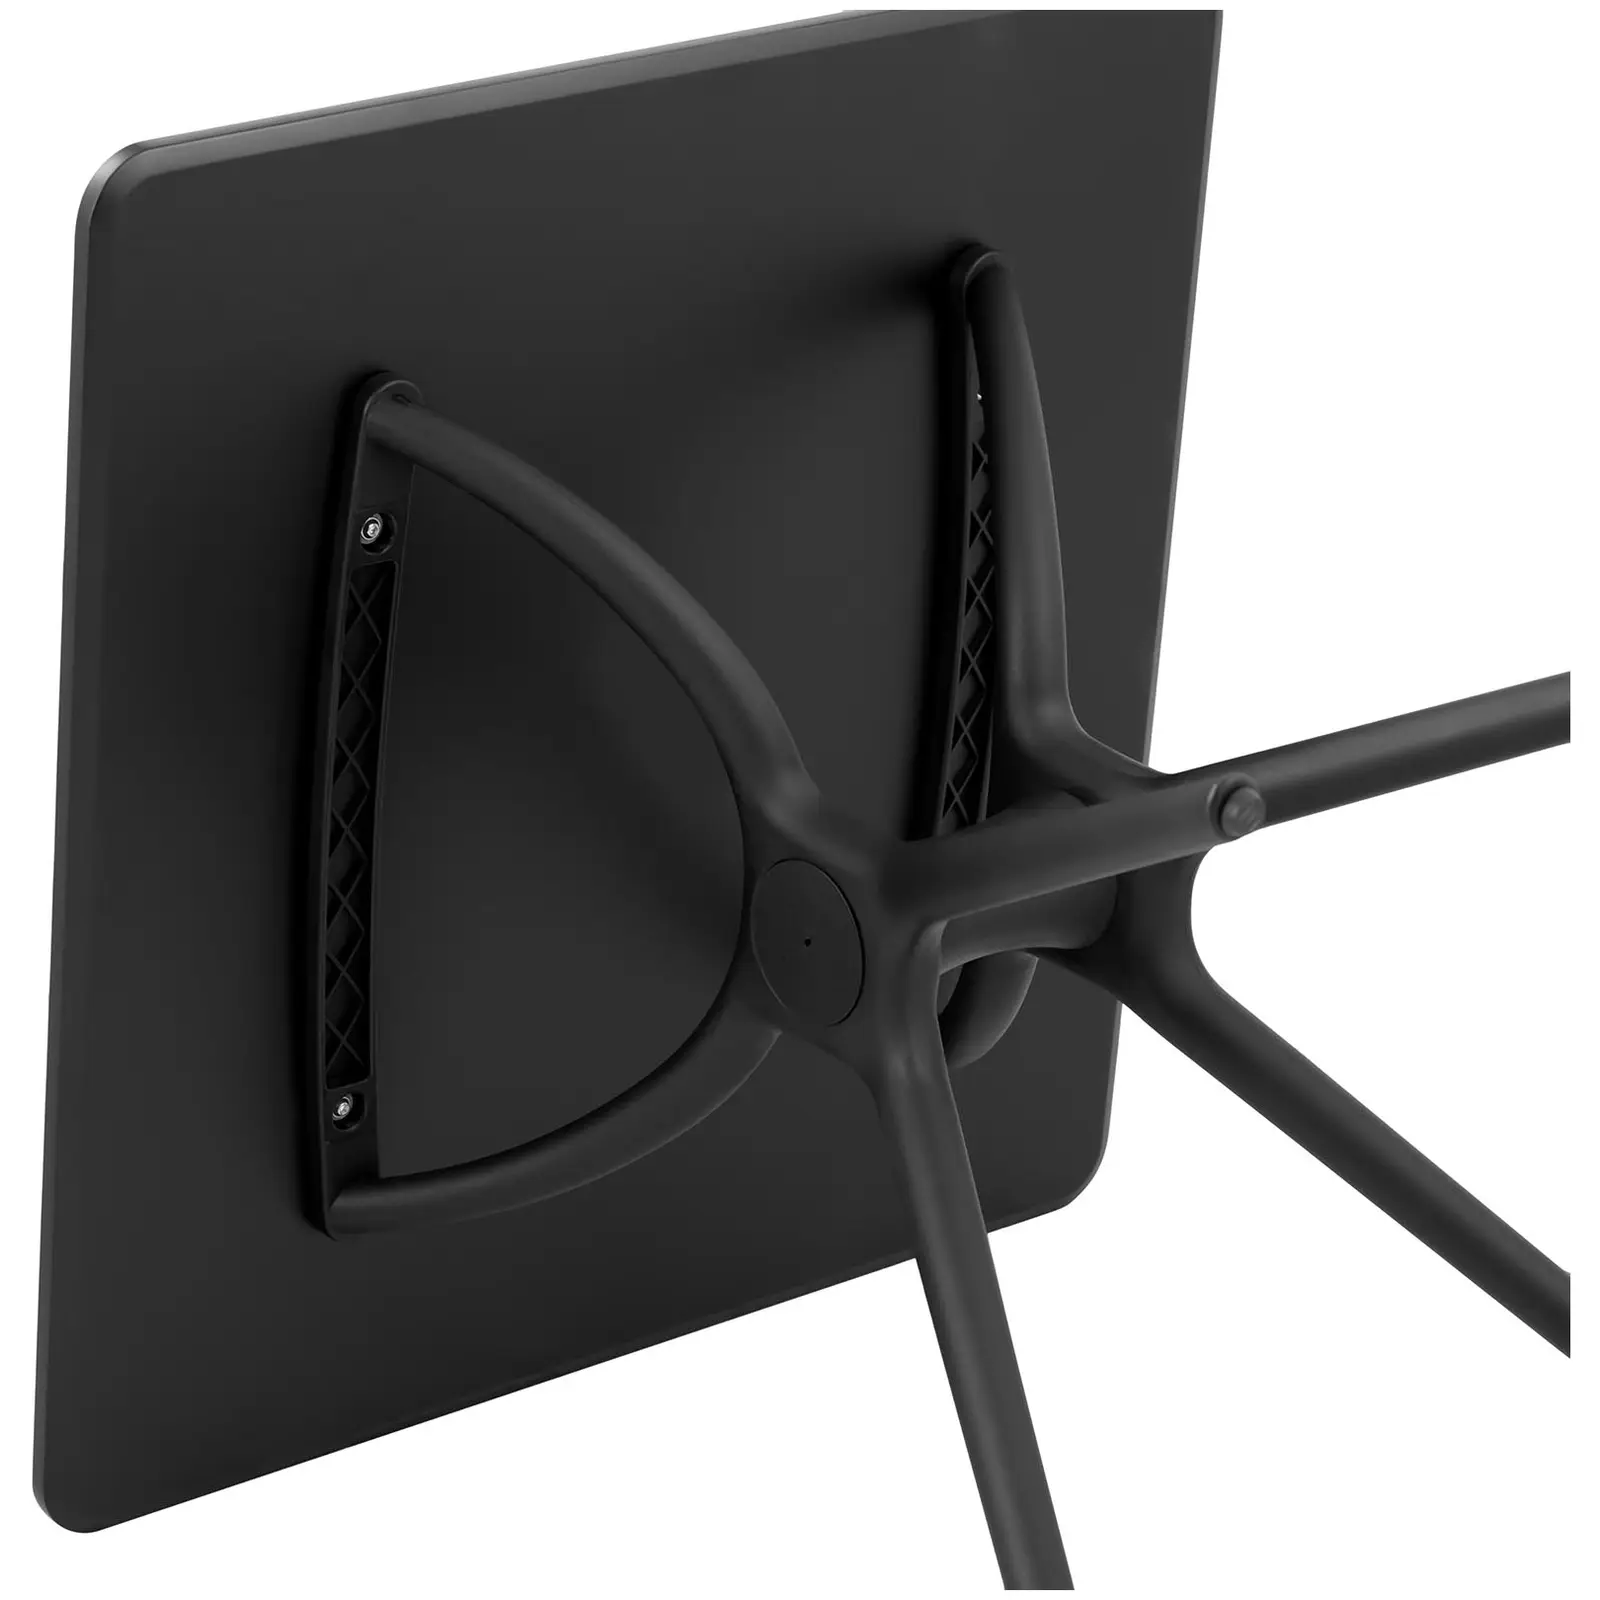 Bord - firkantet - 80 x 80 cm - svart